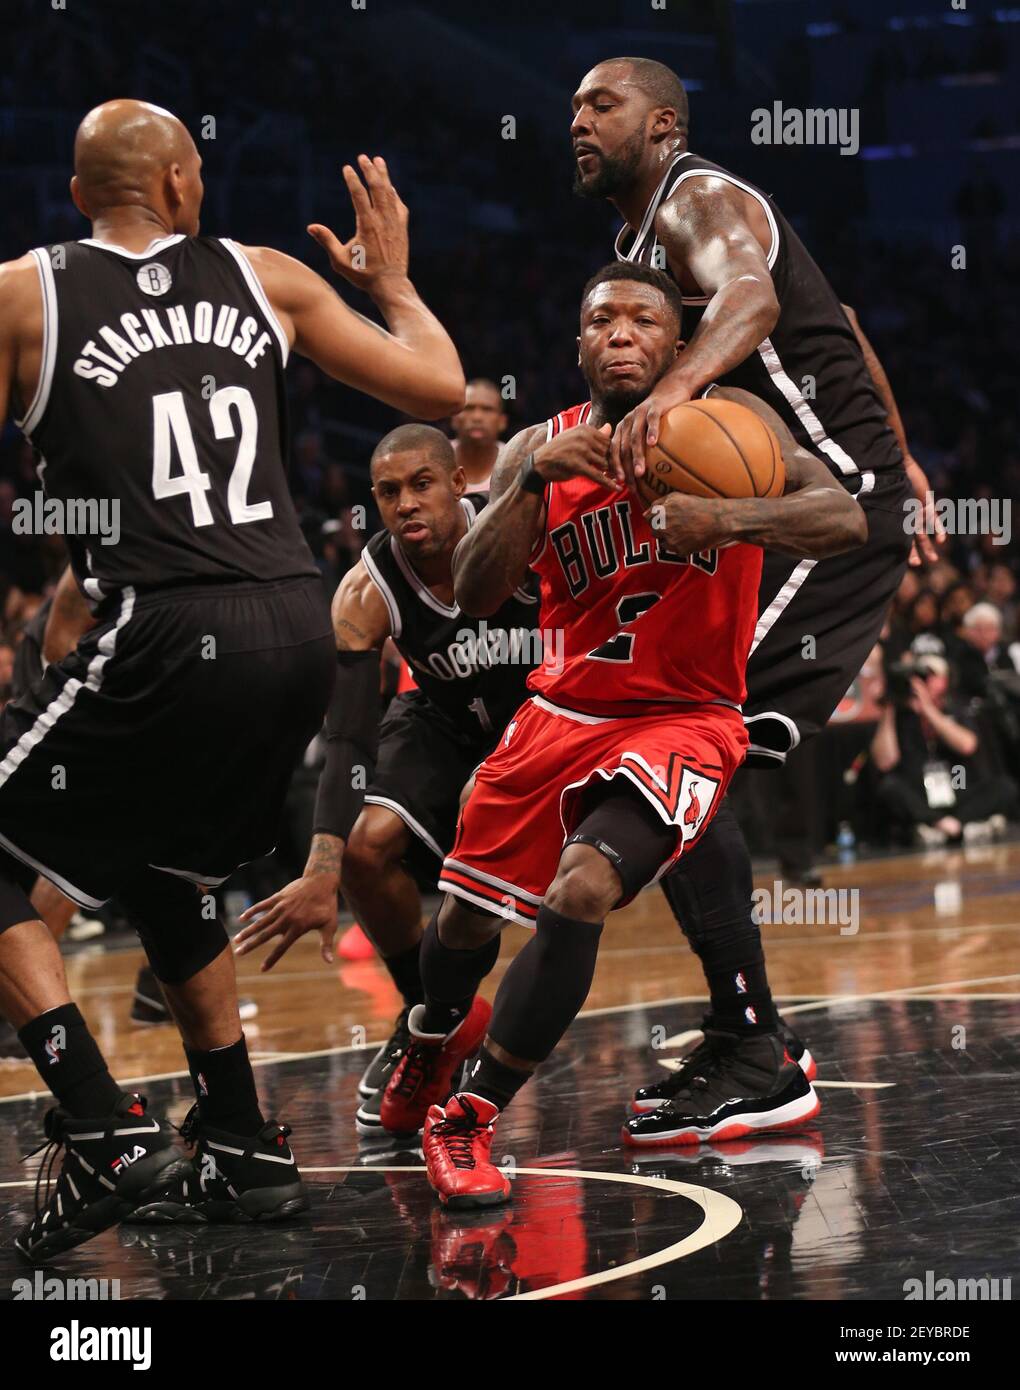 NBA Playoffs: Round 1, Game 6 - Brooklyn Nets @ Chicago Bulls